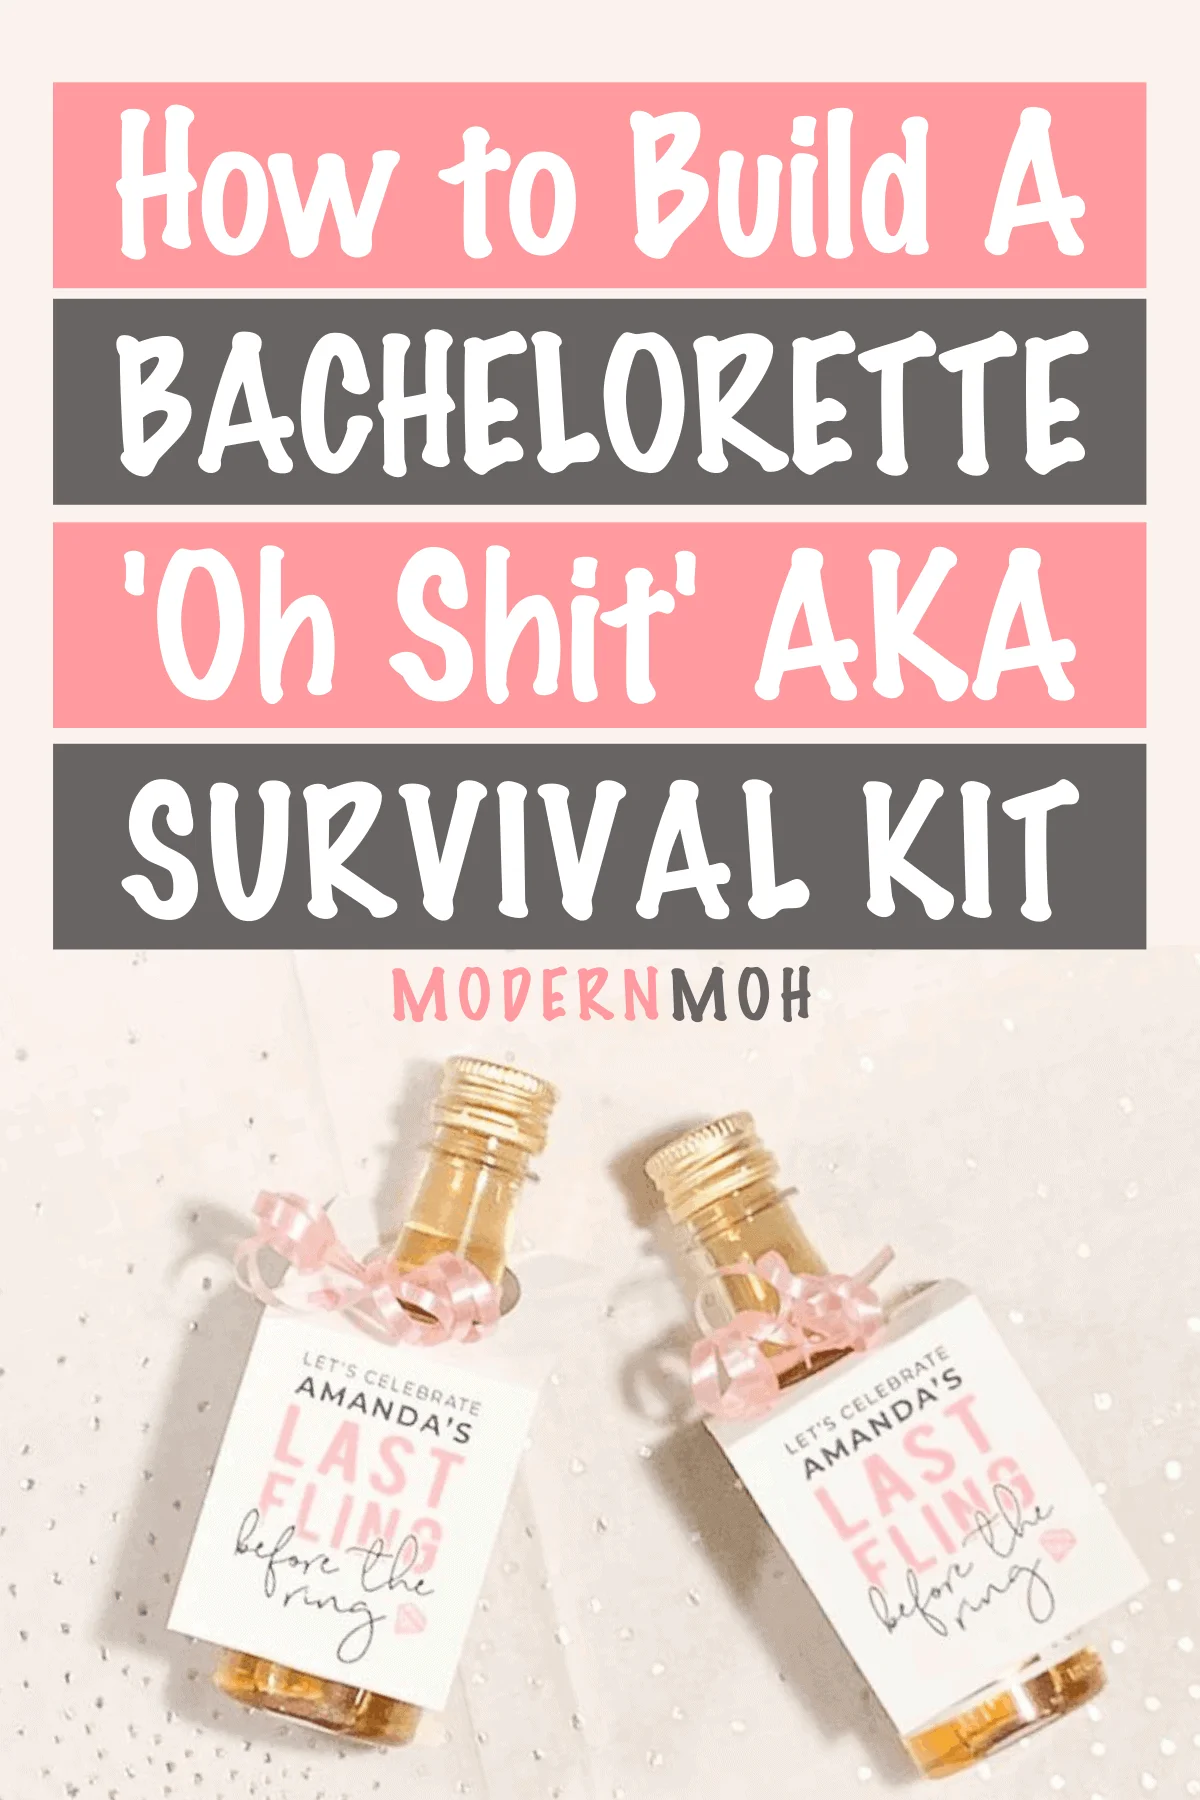 Bachelorette Survival 101: How to build a 